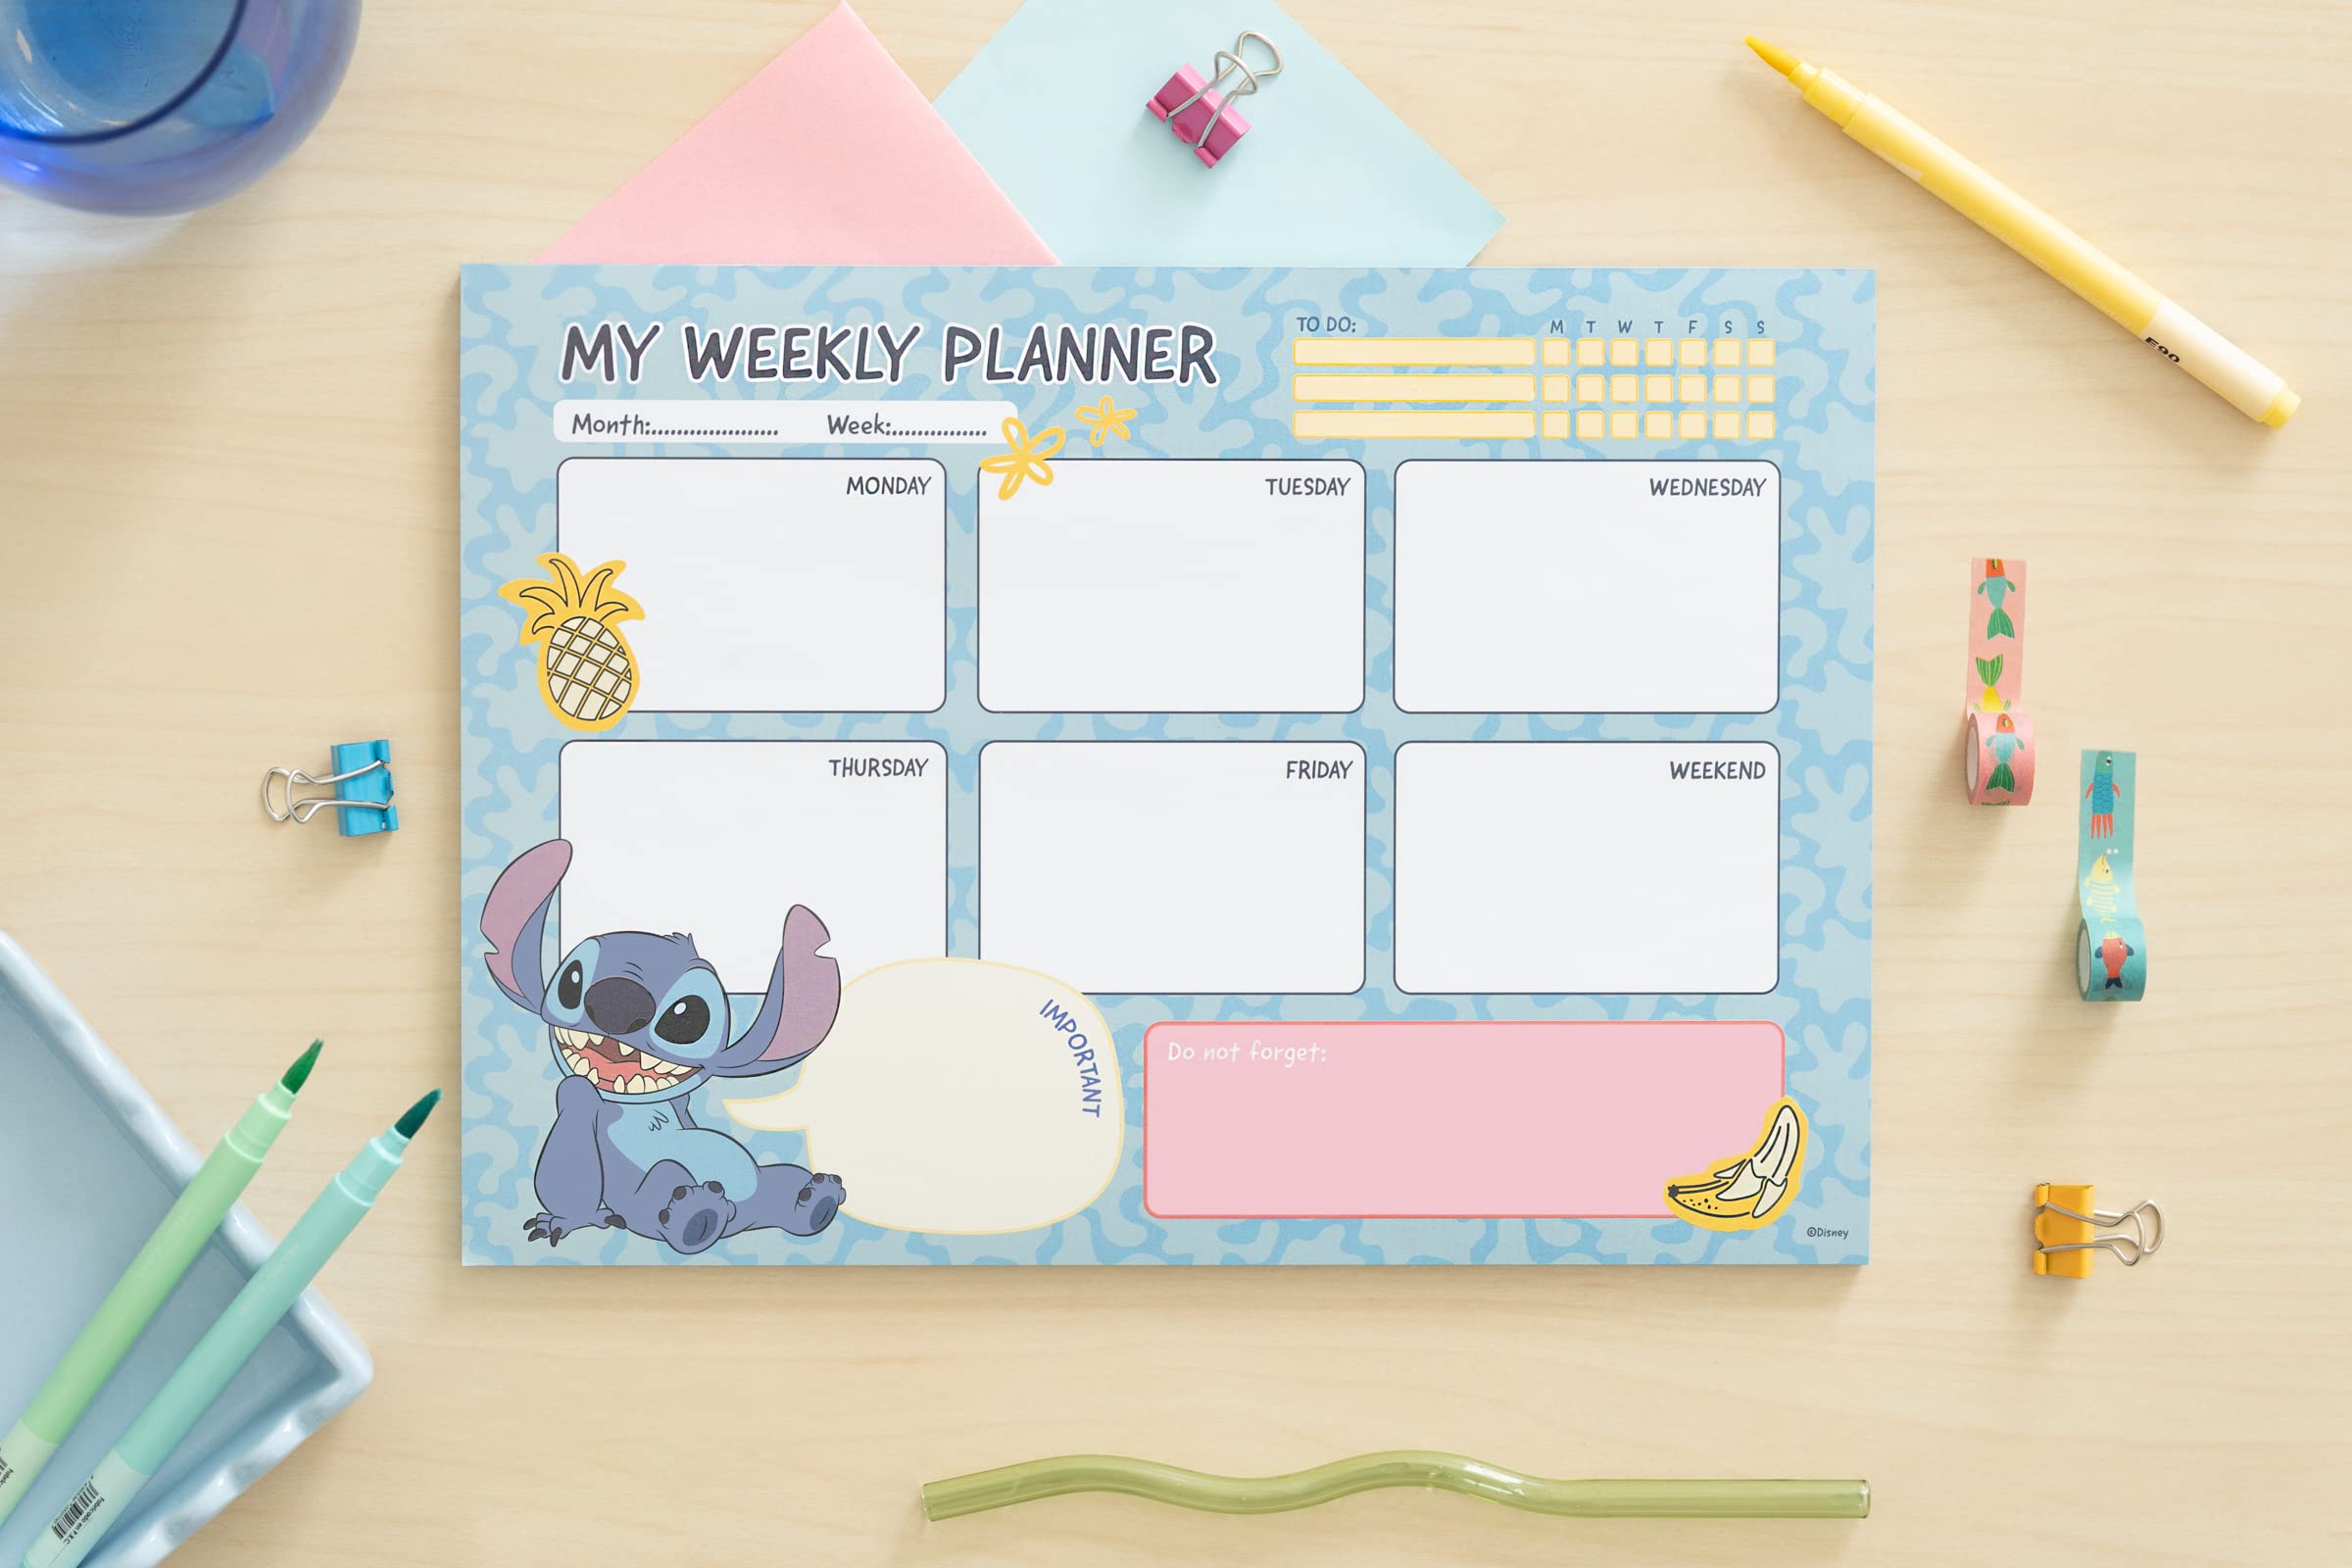 Grupo Erik Disney Stitch Tropical Weekly Planner A4 | Desk Calendar | Family Calendar | 54 Tear Off Pages | Organiser Planner | Weekly Planner Pad Tear Off | Stitch Disney Gifts